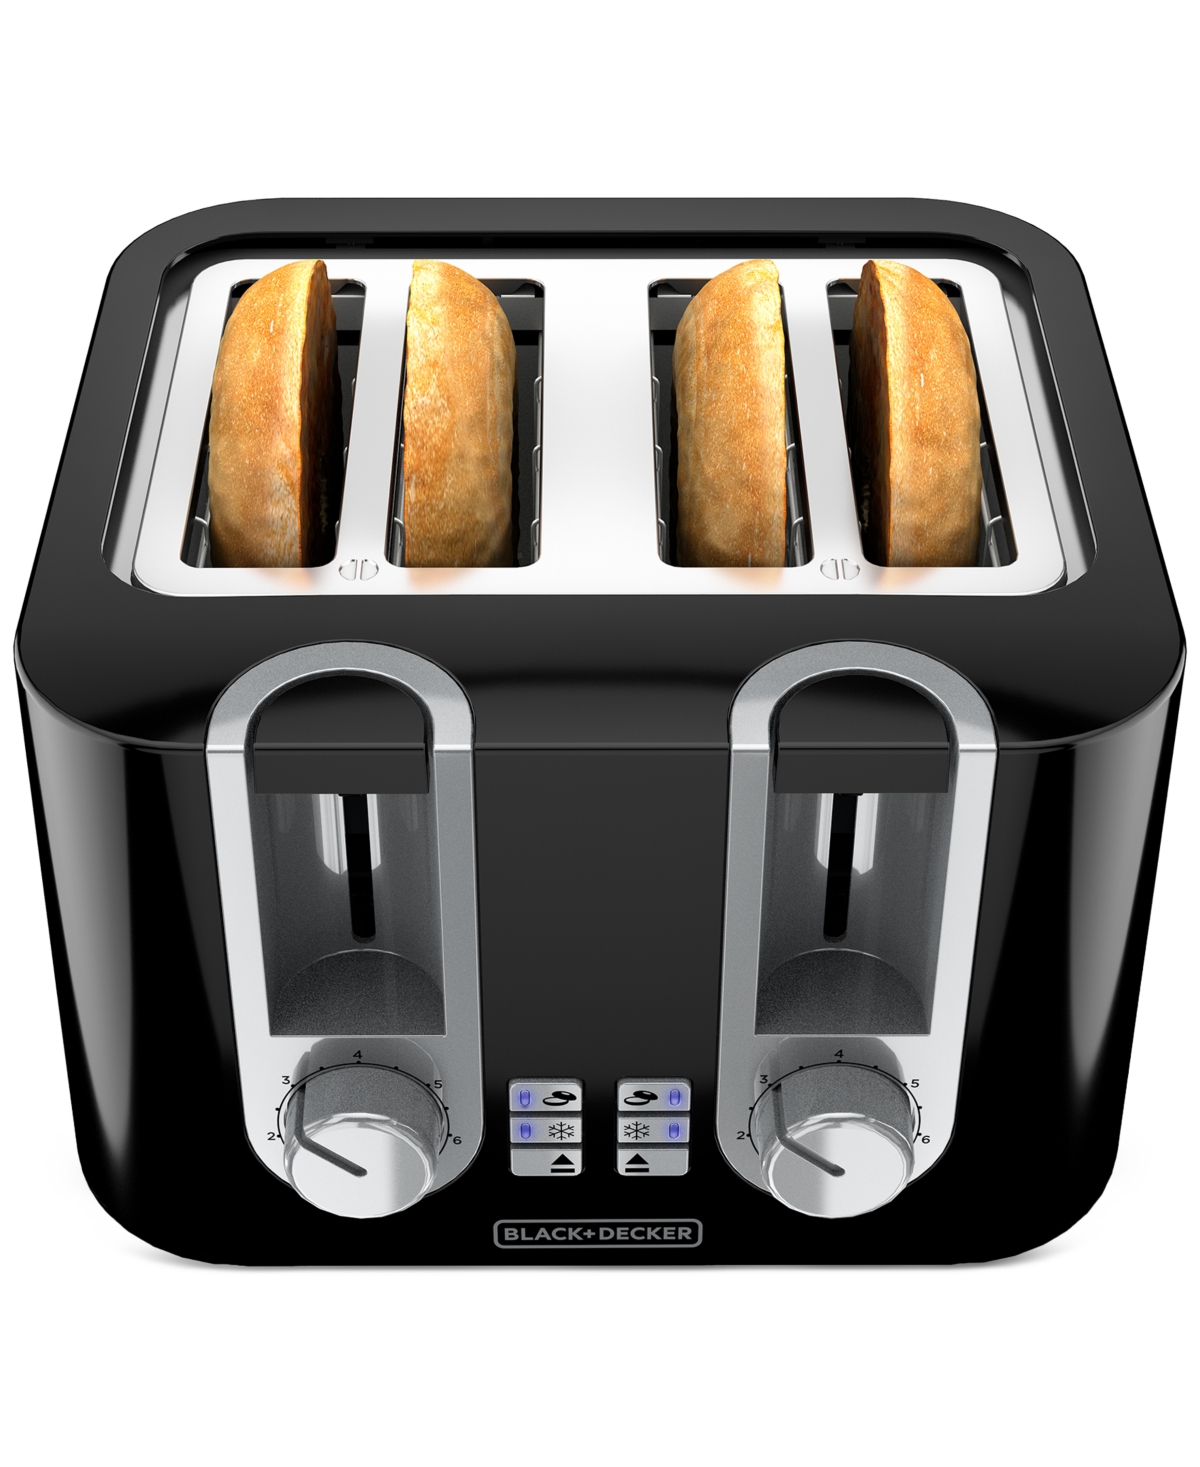 Black & Decker 4-slice Wide-slot High-lift Toaster In Black